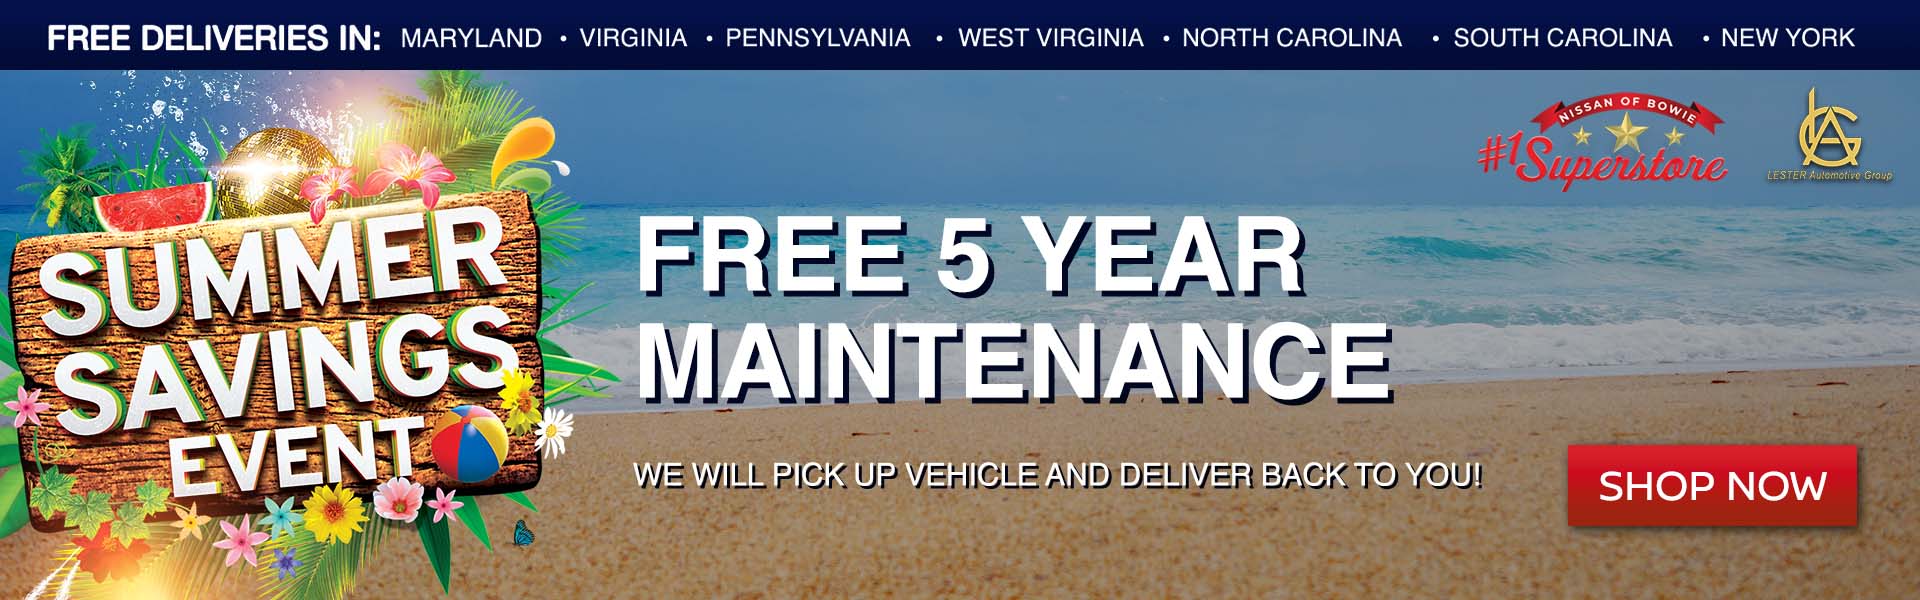 free 5 year maintenance